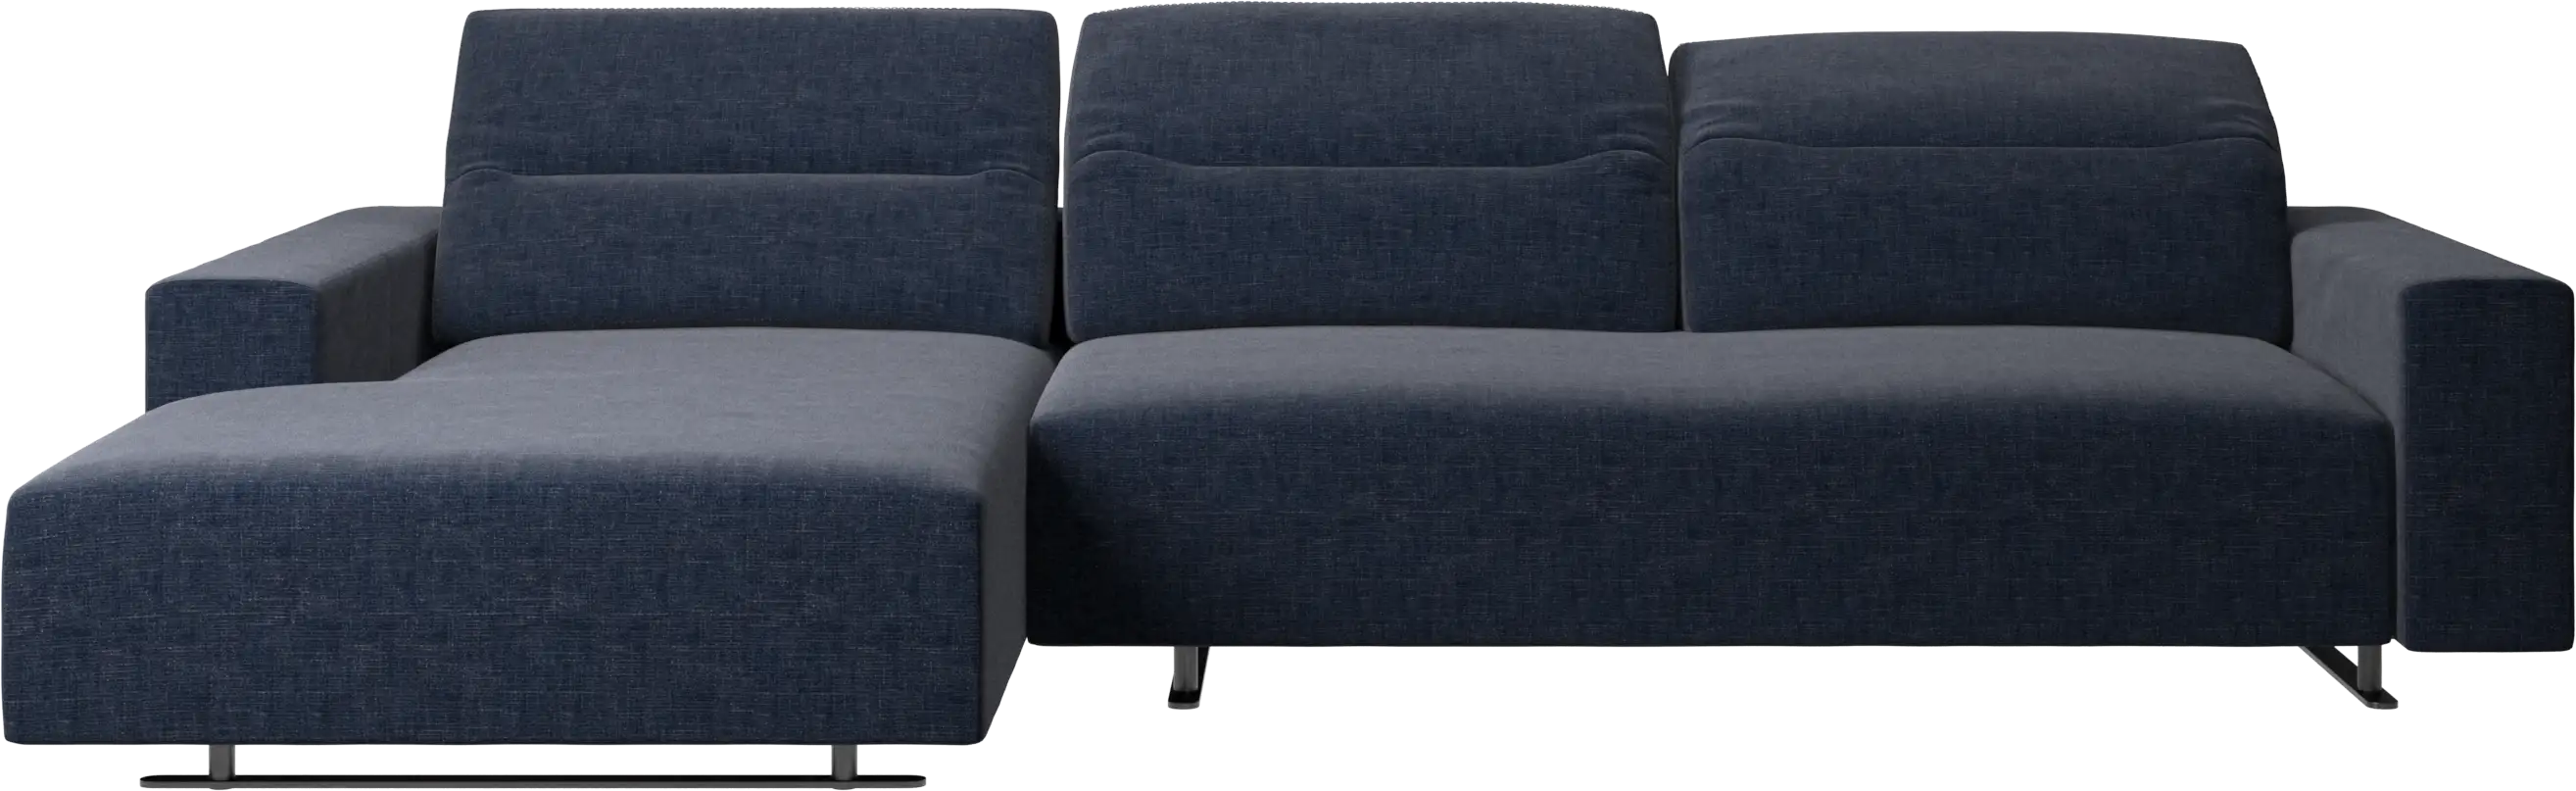 kαναπές Hampton με ρυθμιζόμενη πλάτη, μονάδα resting και αποθηκευτικό χώρο στις δύο πλευρές